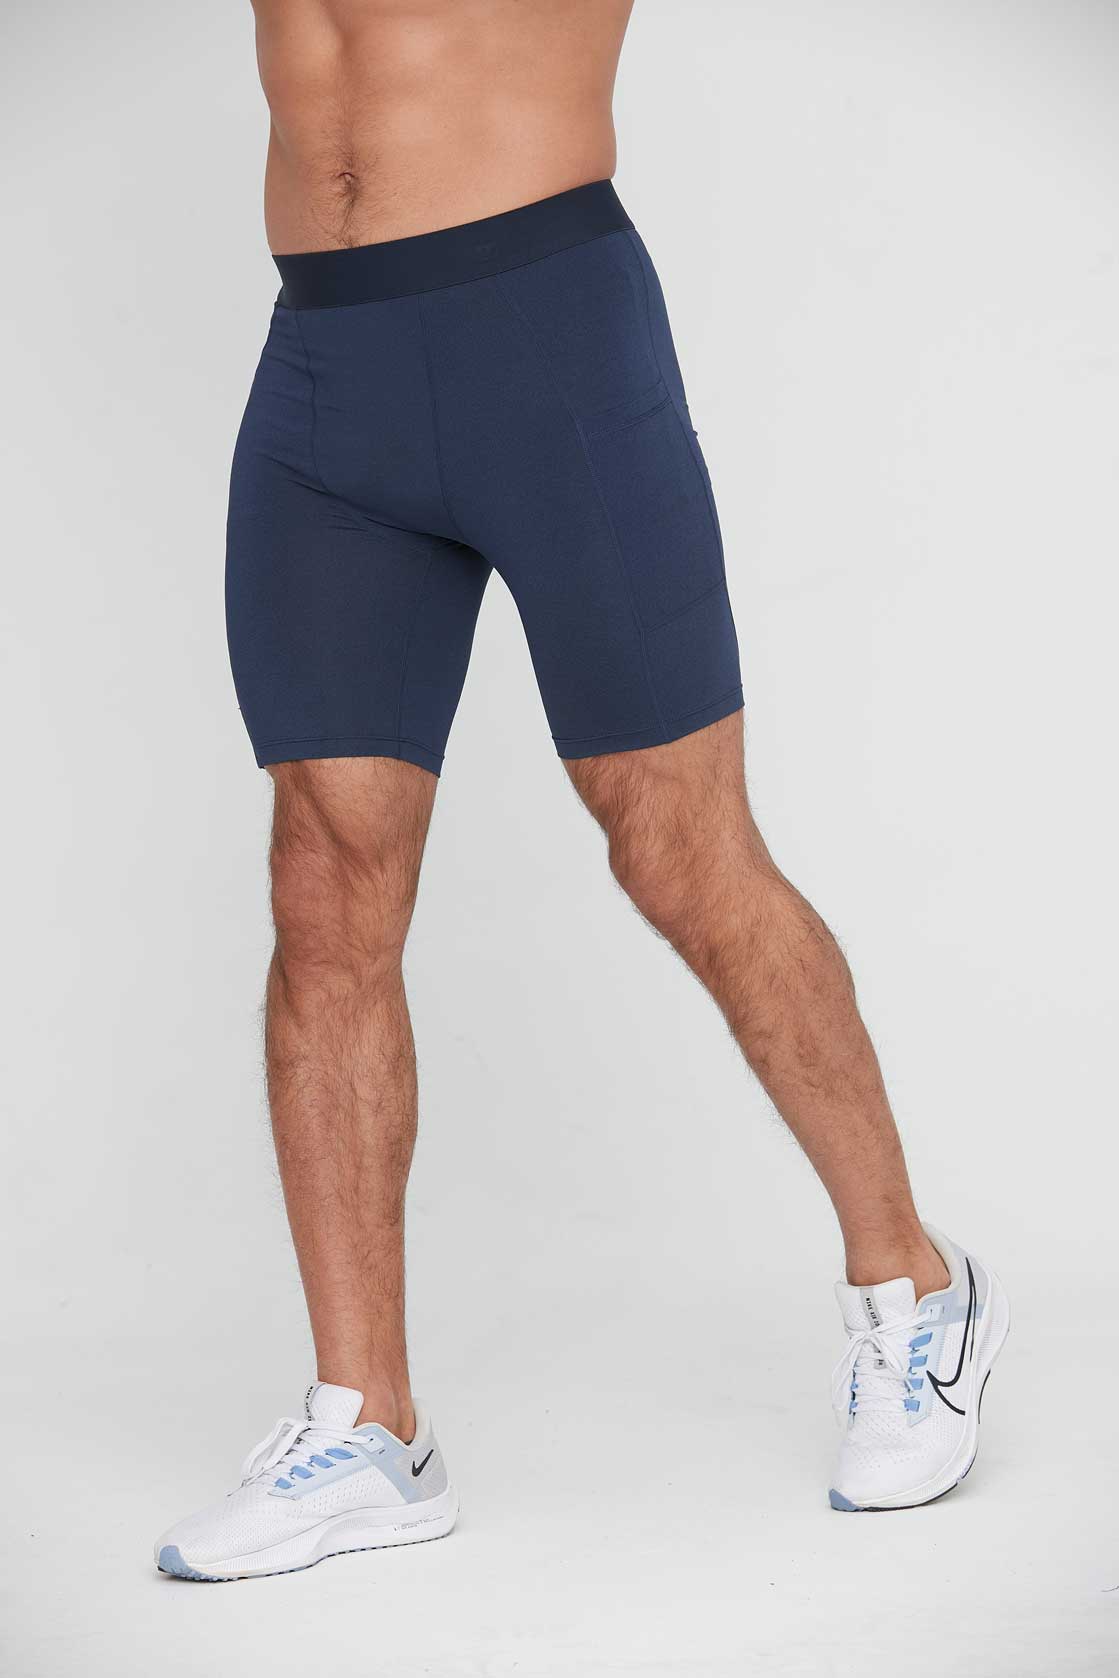 HRG1011-Men's tight-fitting sports capri pants, basketball training ba –  HENGRUN